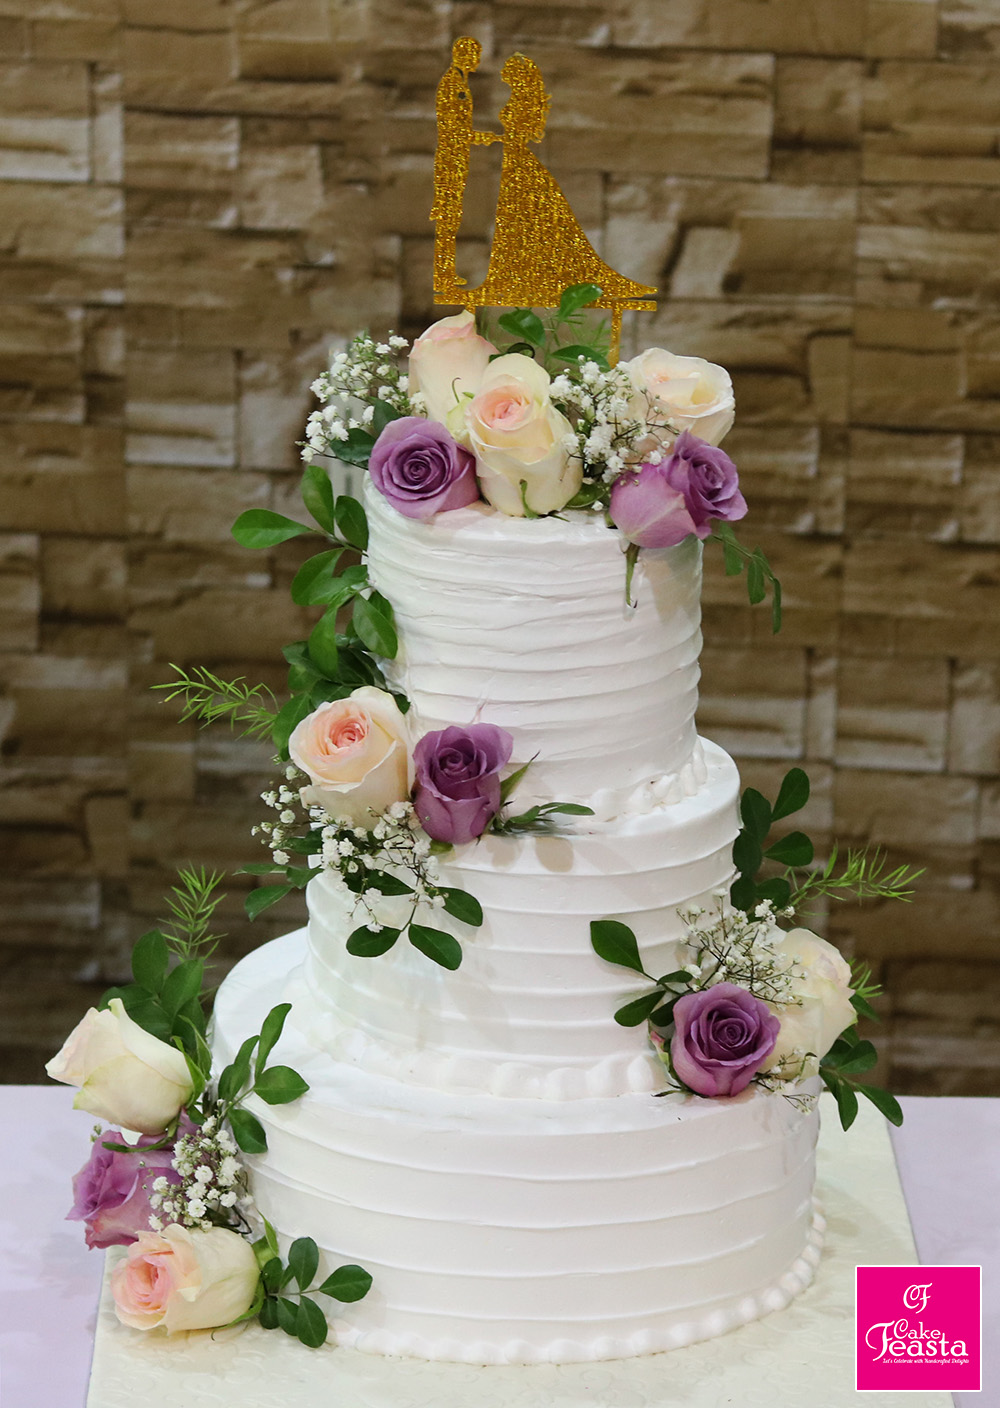 Flowers Fresh Cream Wedding Cake - Marriage anniversary cakes